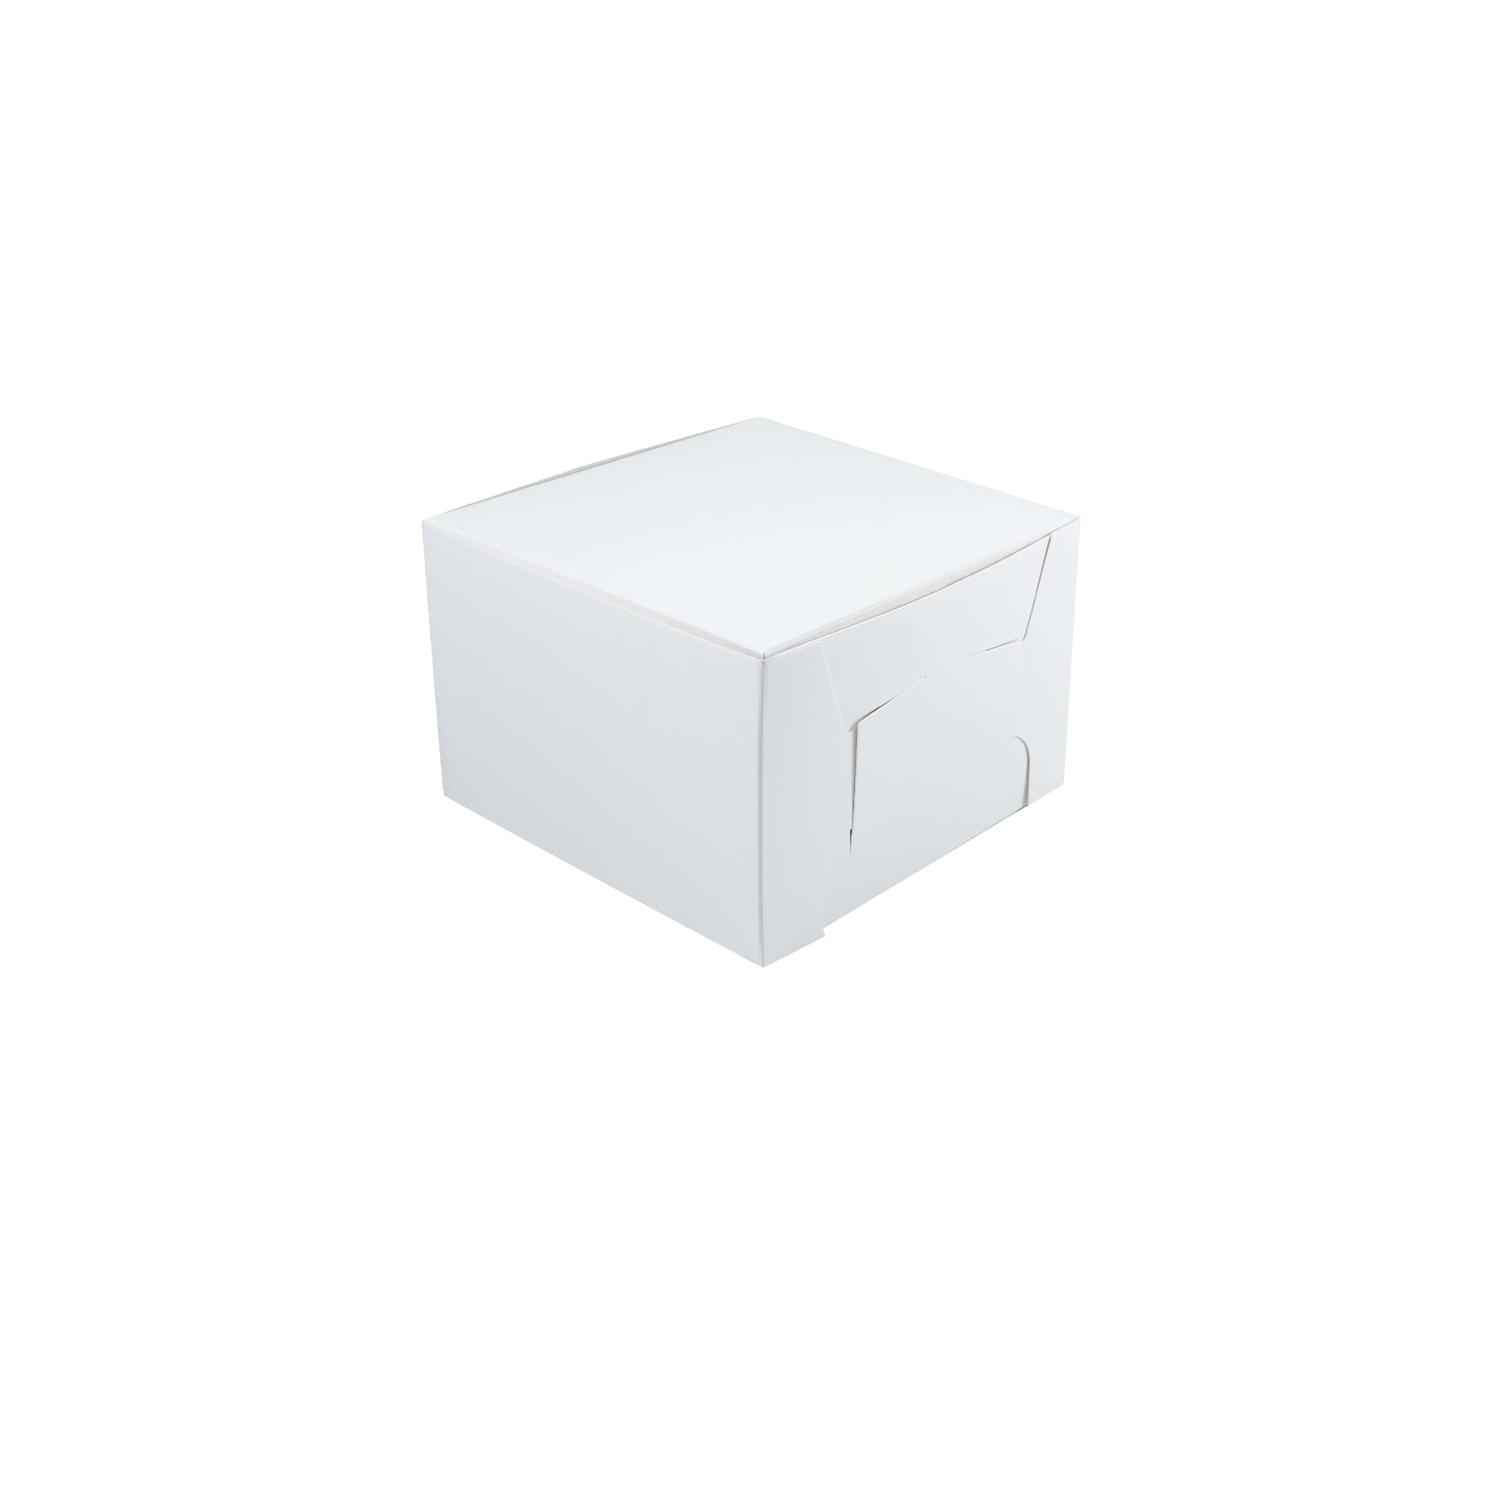 WHITE 4.5 X 4.5 X 3 INCHES CAKE BOX